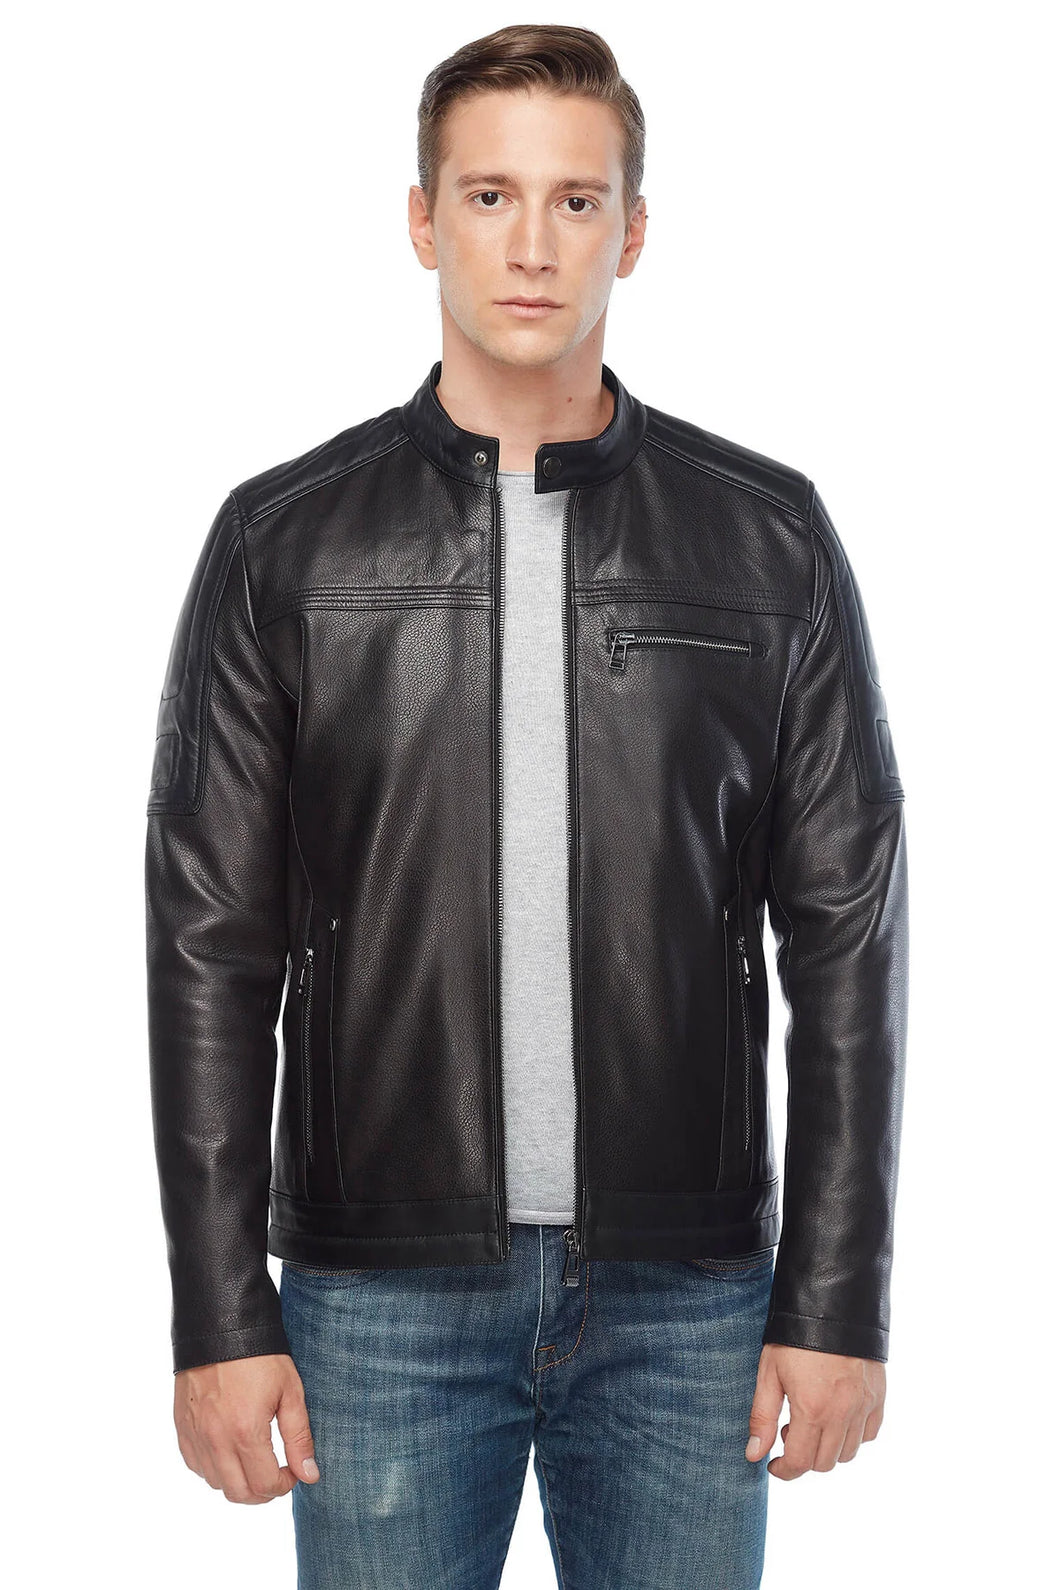 Black Leather Sport Jacket for Men - Boneshia